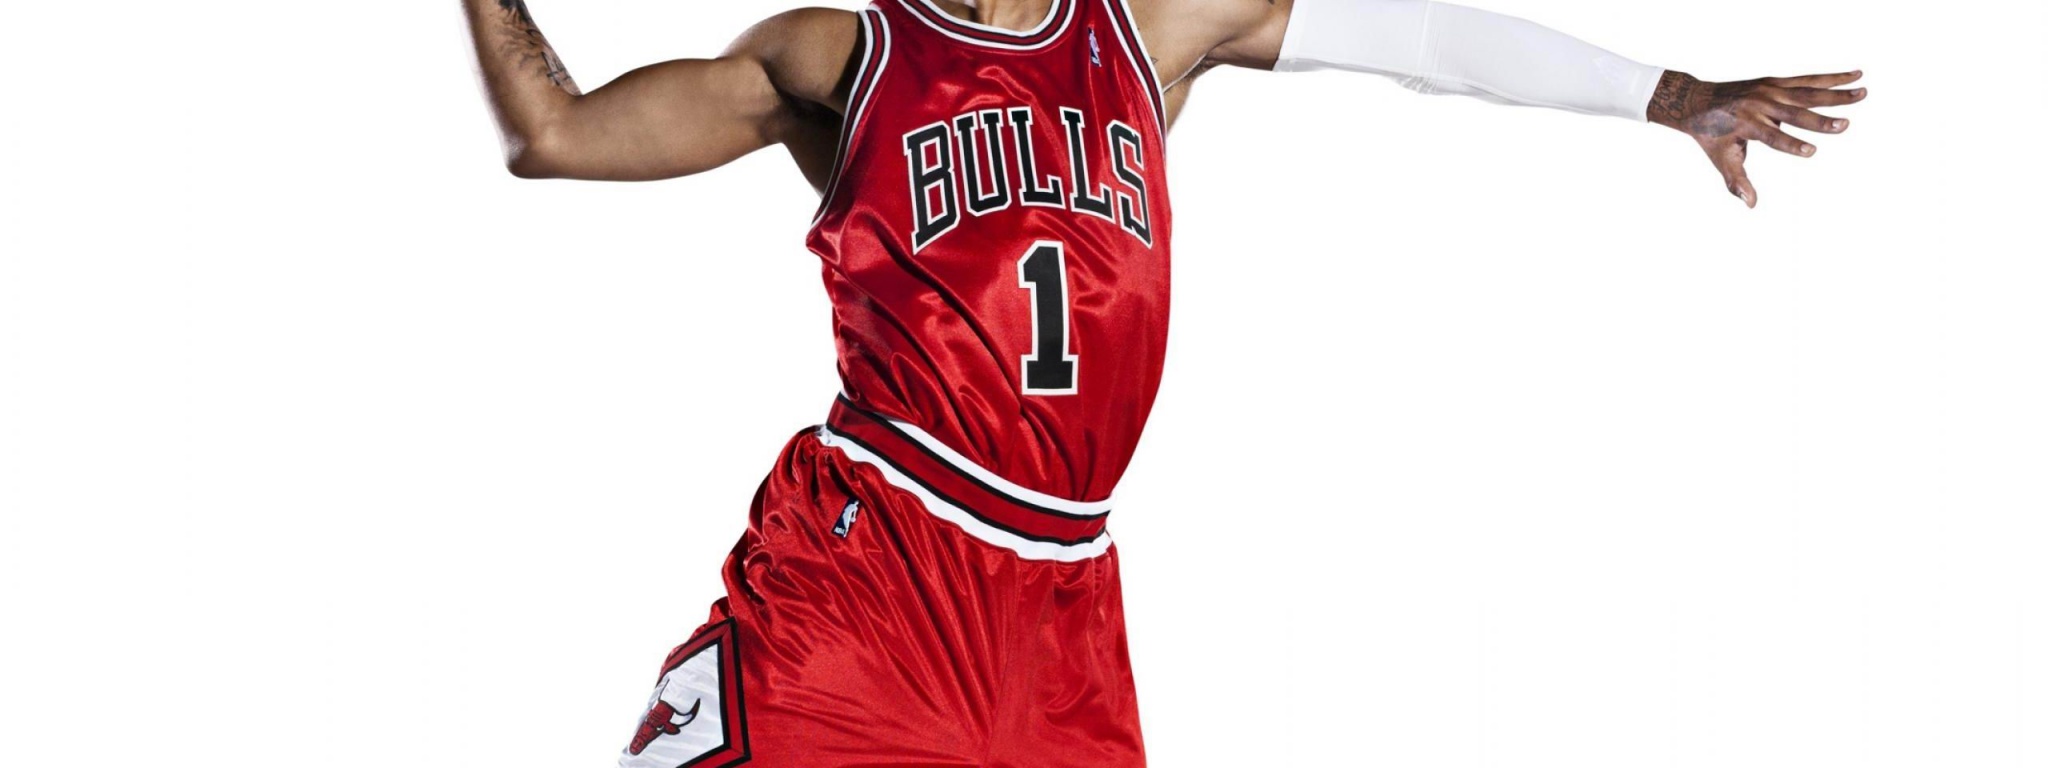 Derrick Rose Bulls Basketball Player